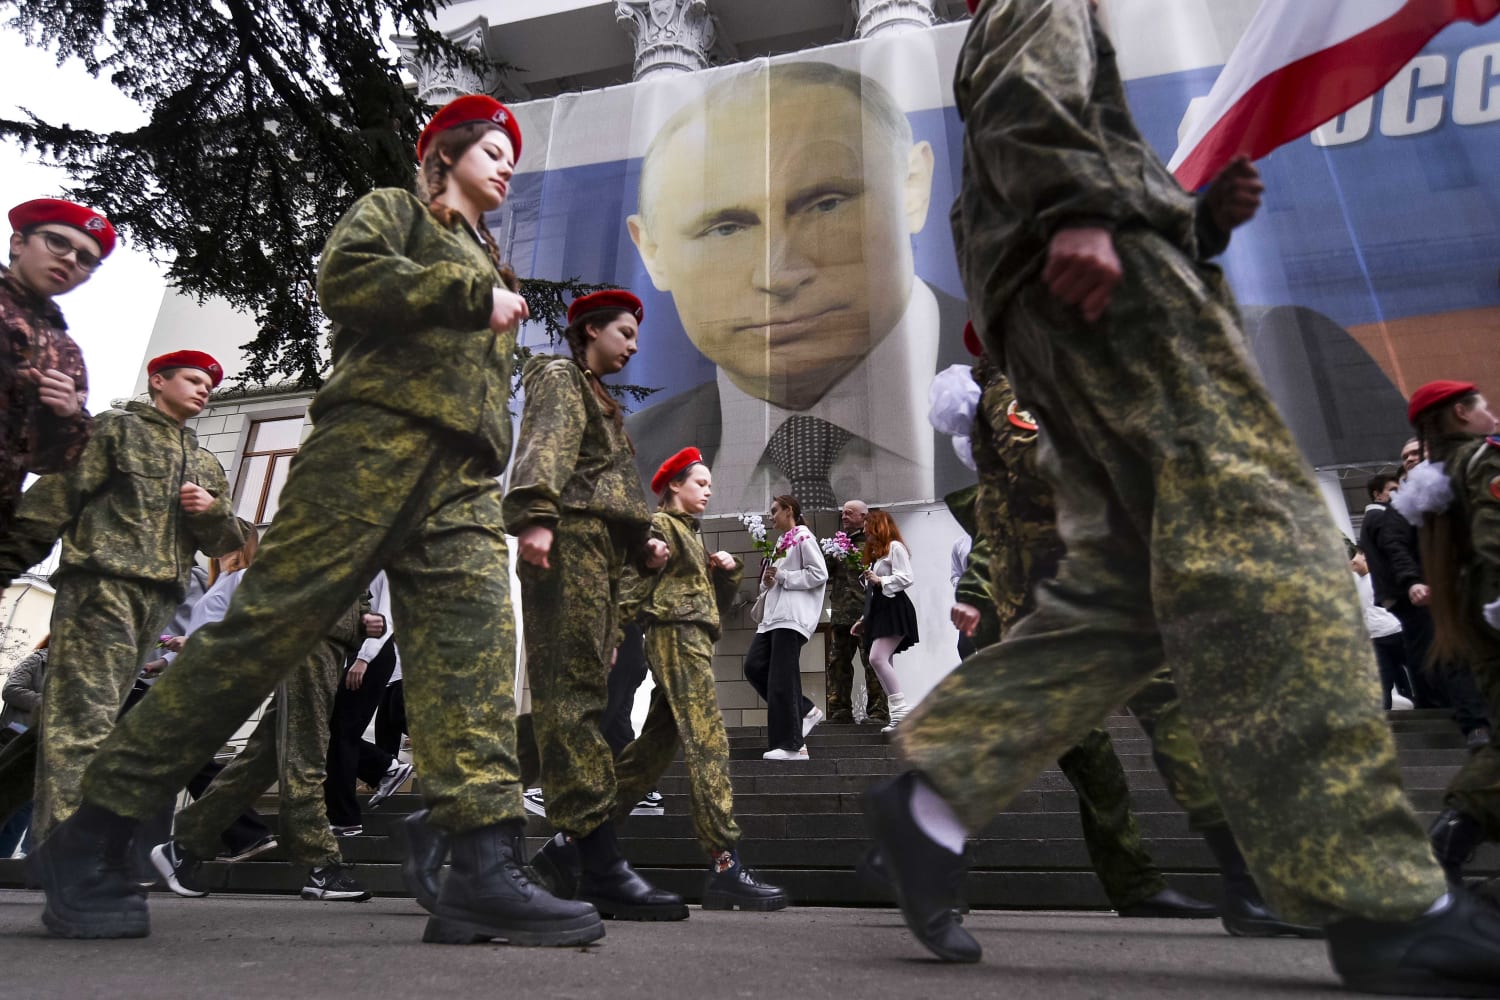 A Muslim minority loyal to Ukraine bears the brunt of Russia’s crackdown in Crimea